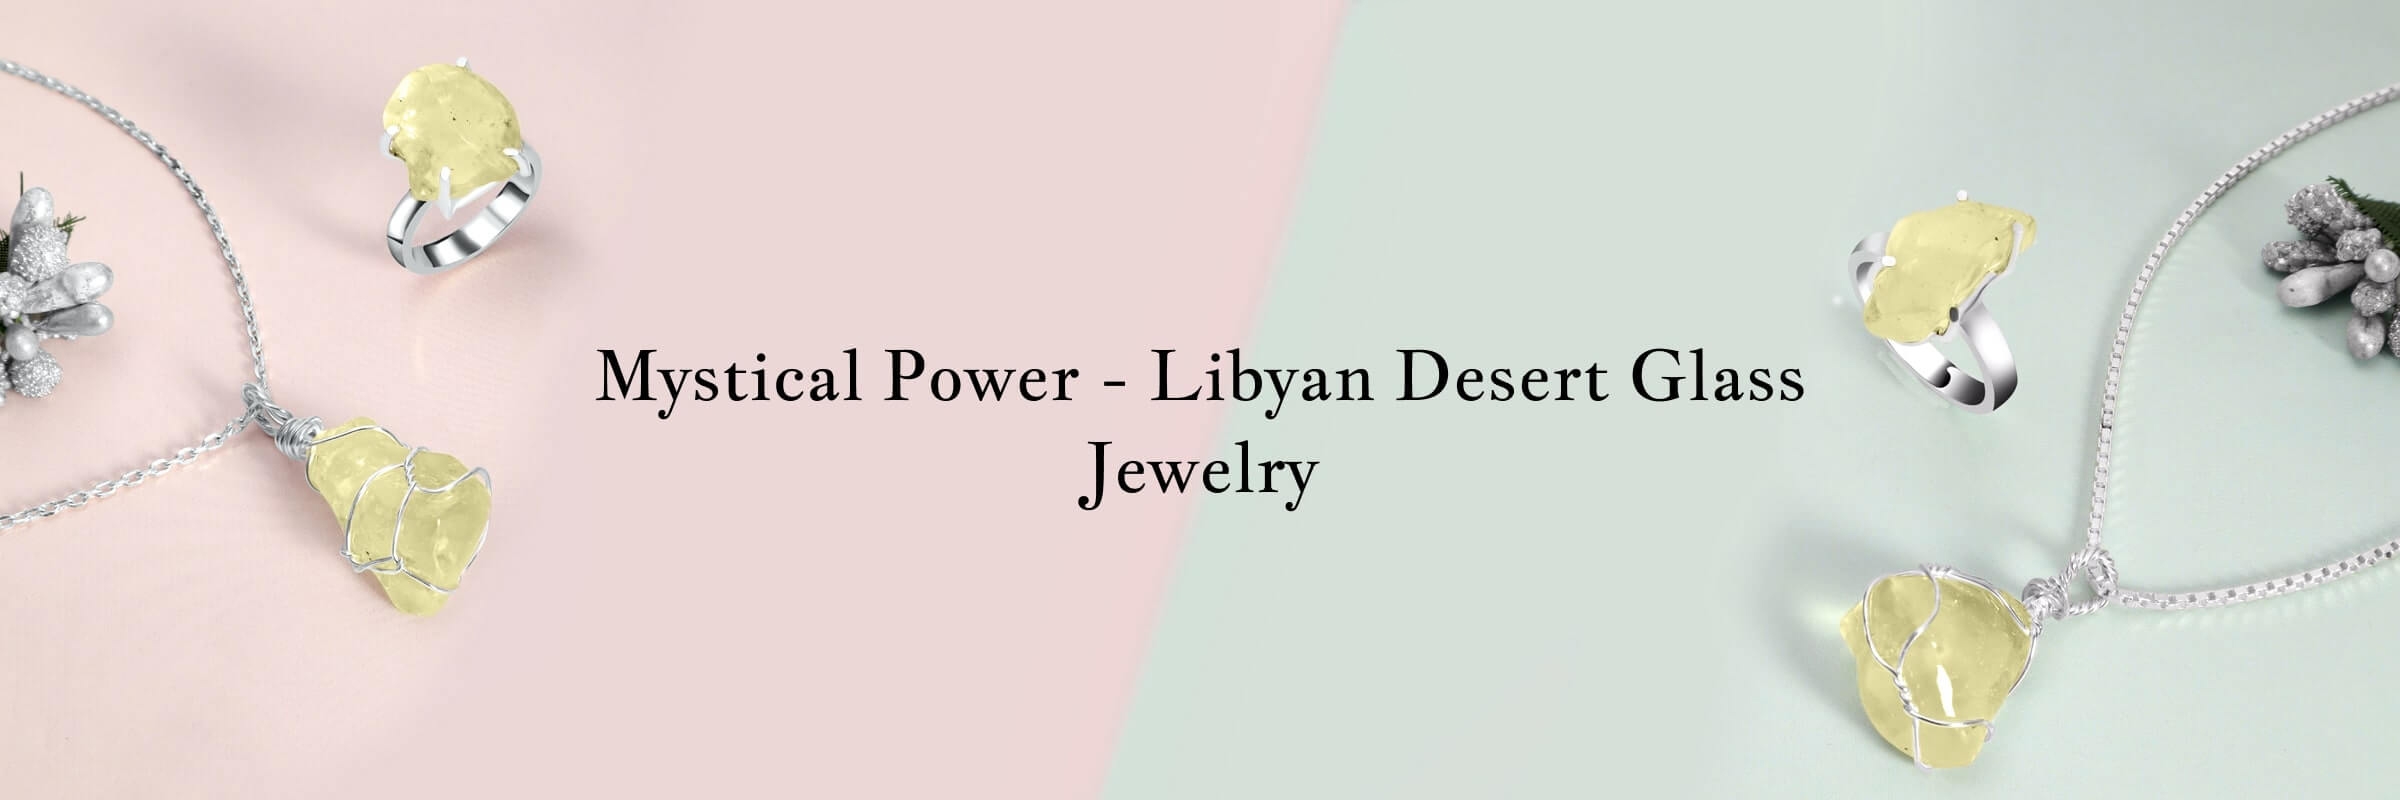 Benefits of Libyan Desert Glass Jewelry